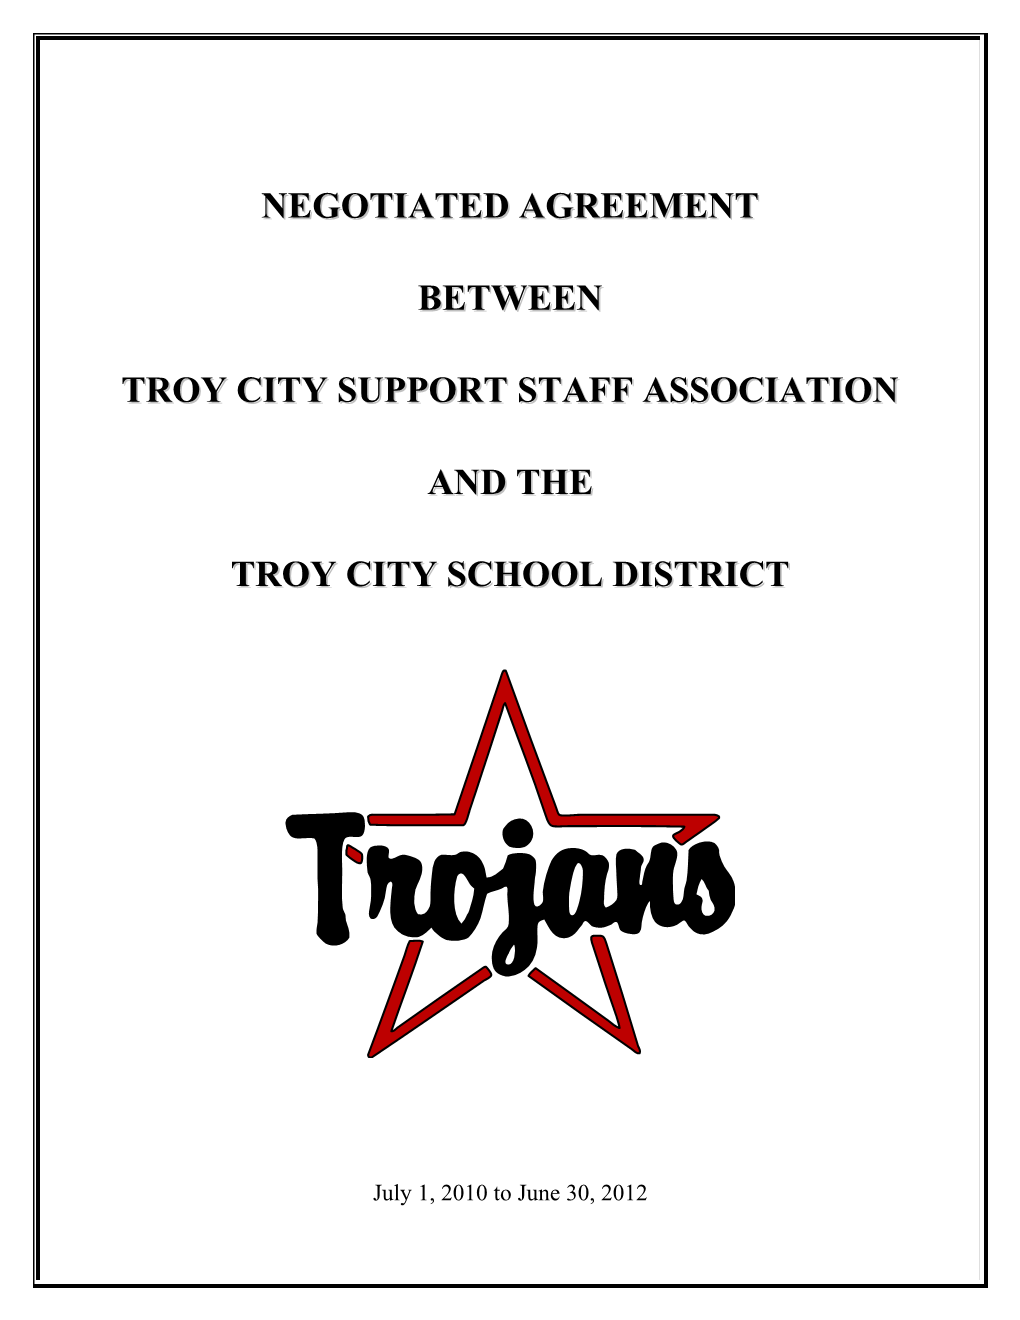 Troy City Support Staff Association